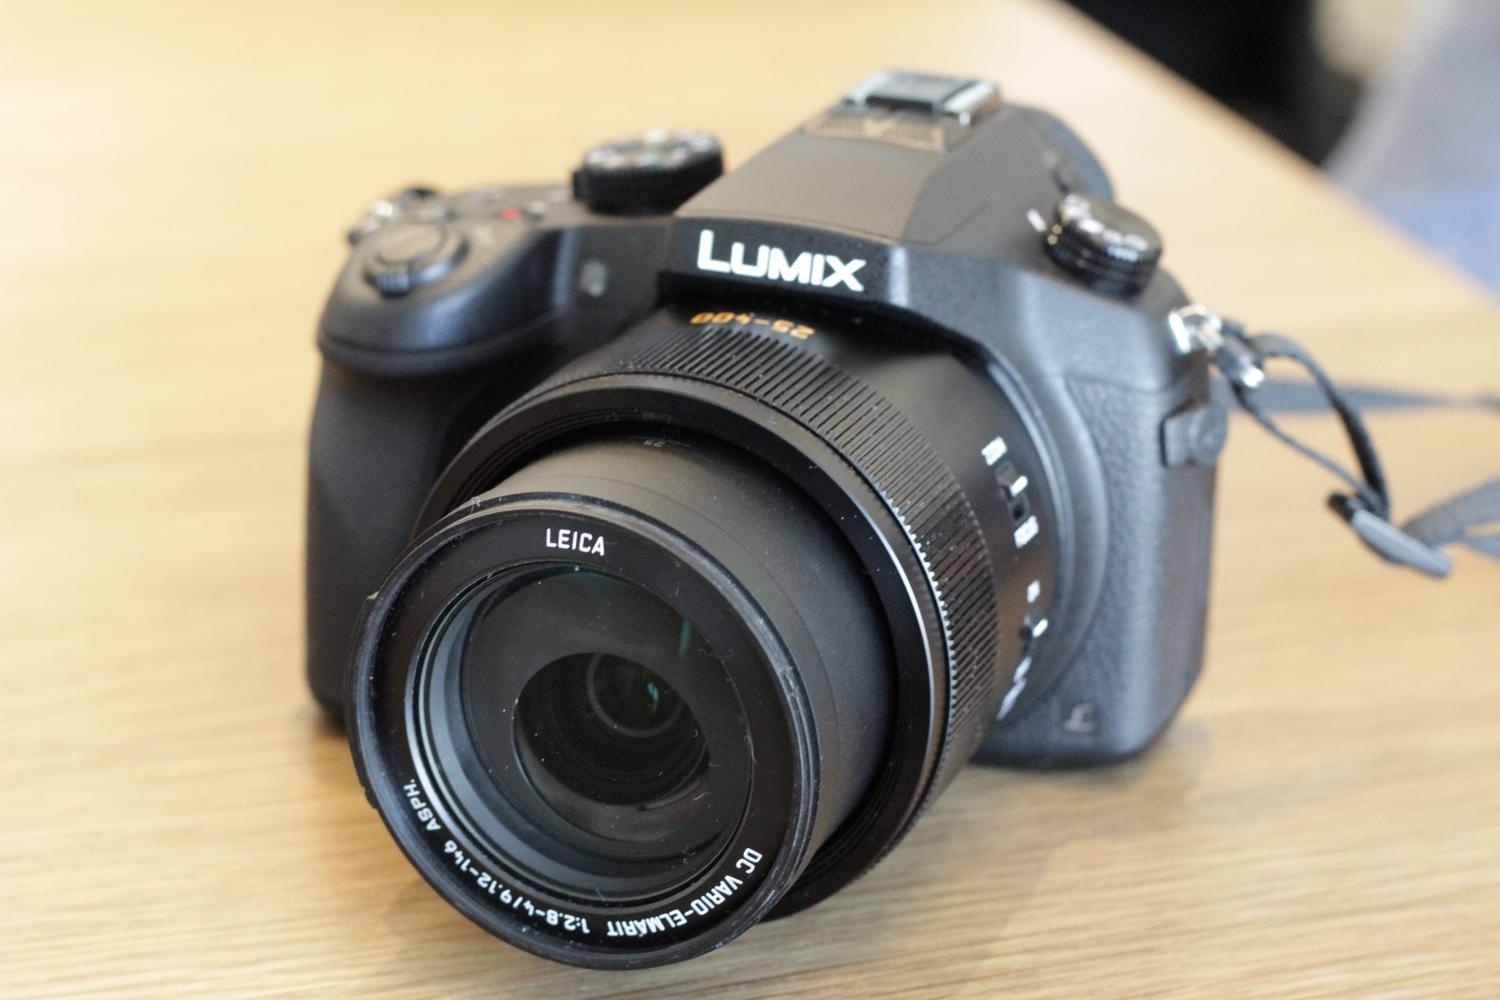 panasonic introduces 4k capable lumix fz1000 bridge camera img 1293